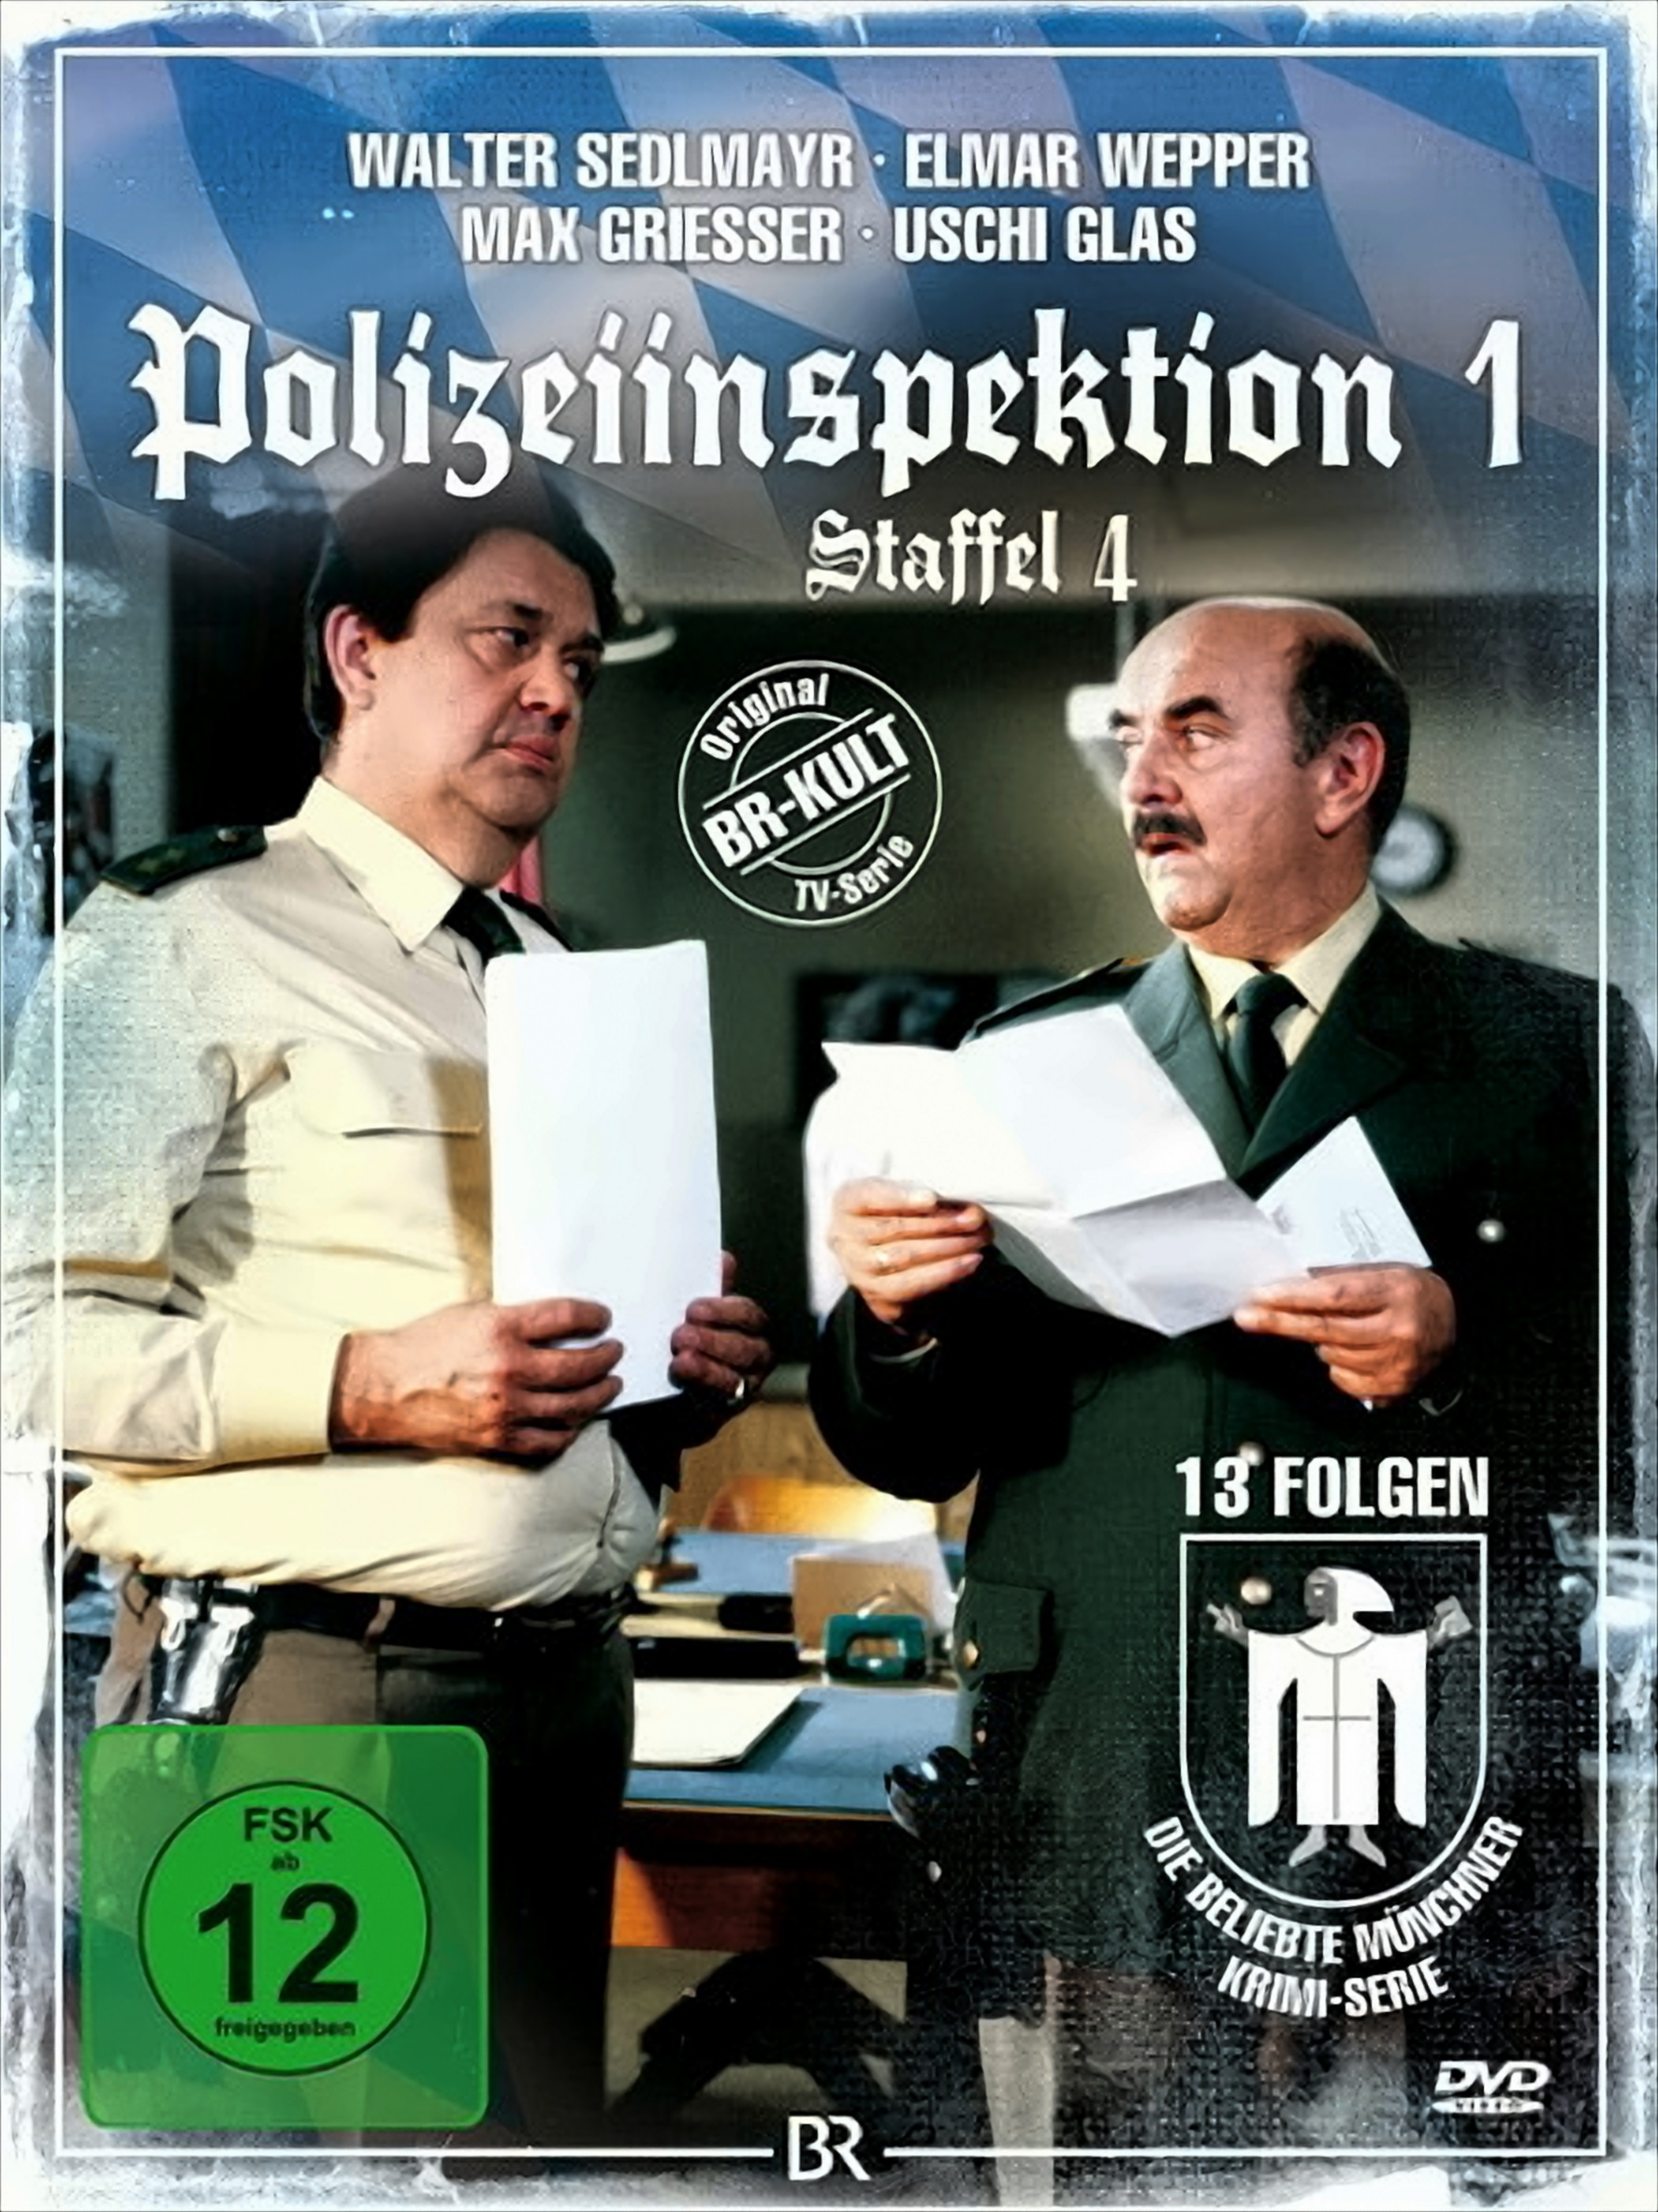 Polizeiinspektion 1 - 04 DVD Staffel